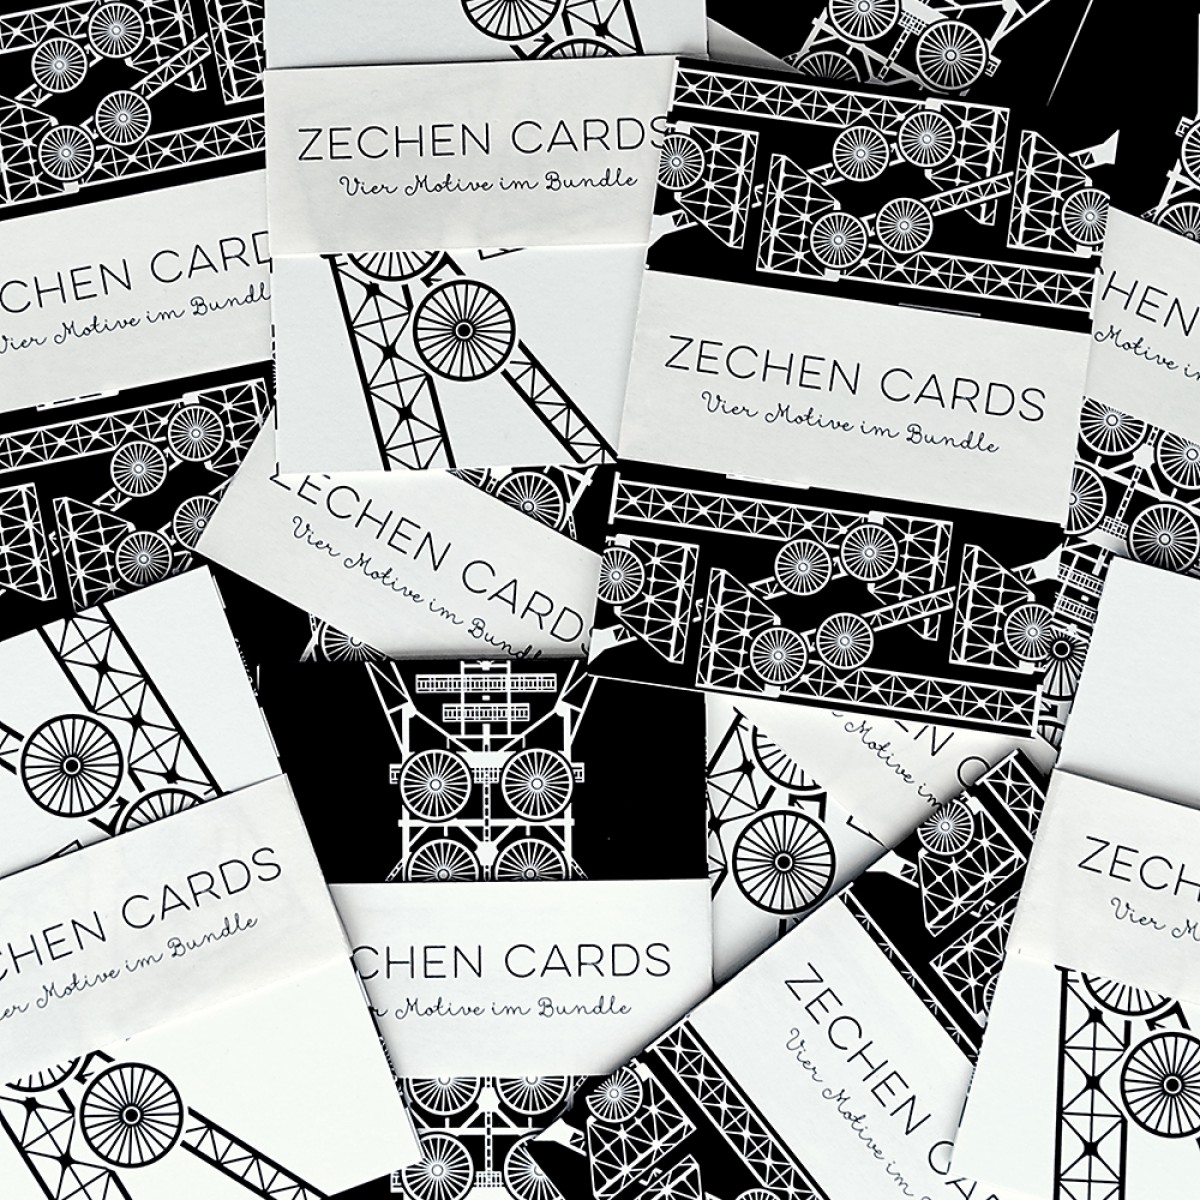 Zechen Cards / Vier Motive im Bundle